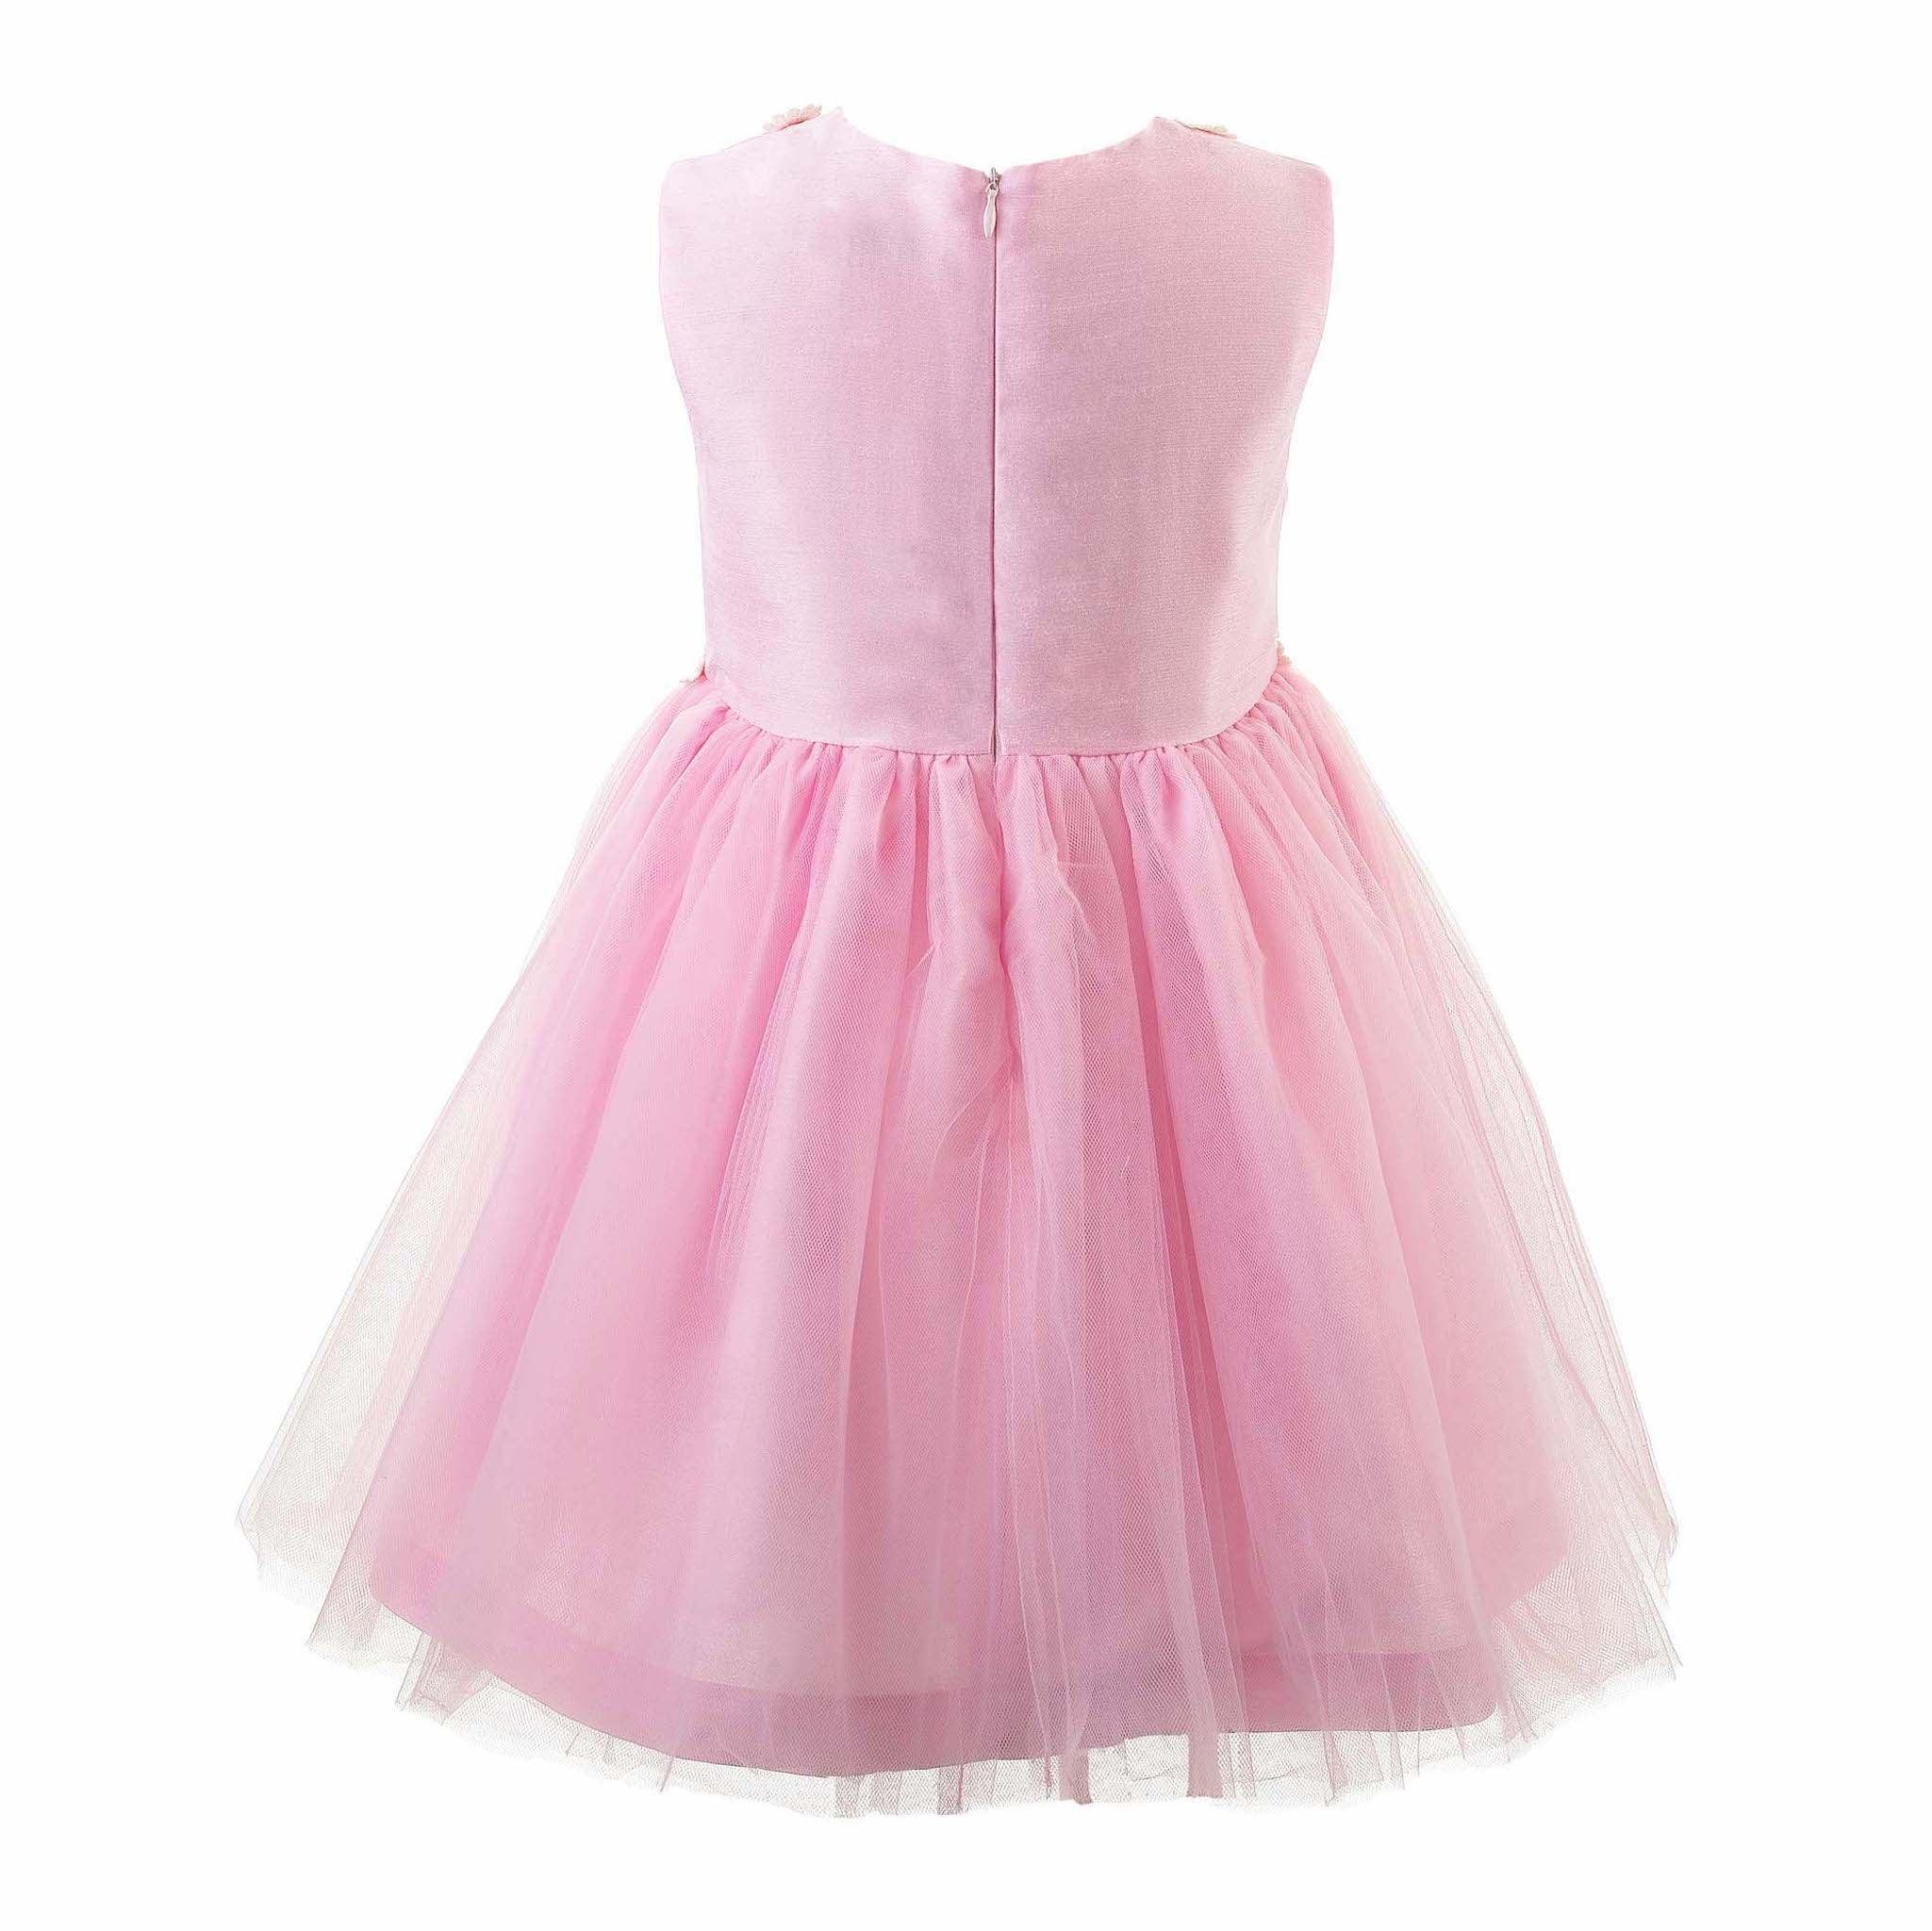 Girls Dusty Pink Party Dress - The Kidz Fashion